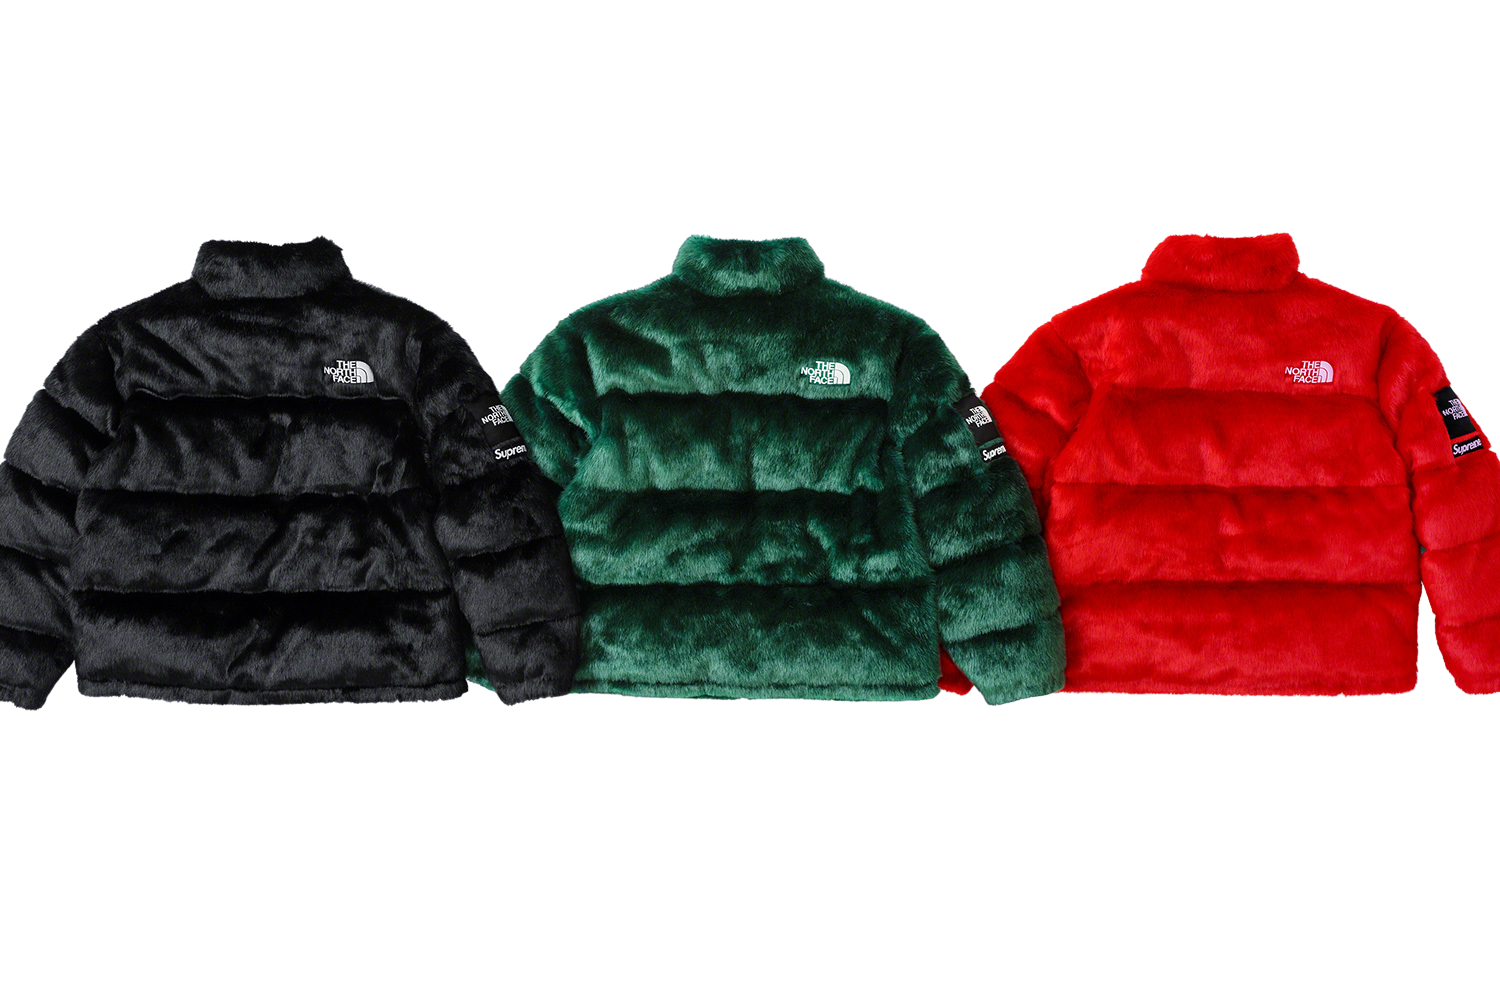 Supreme®/The North Face® Faux Fur Nuptse Jacket - Supreme Community